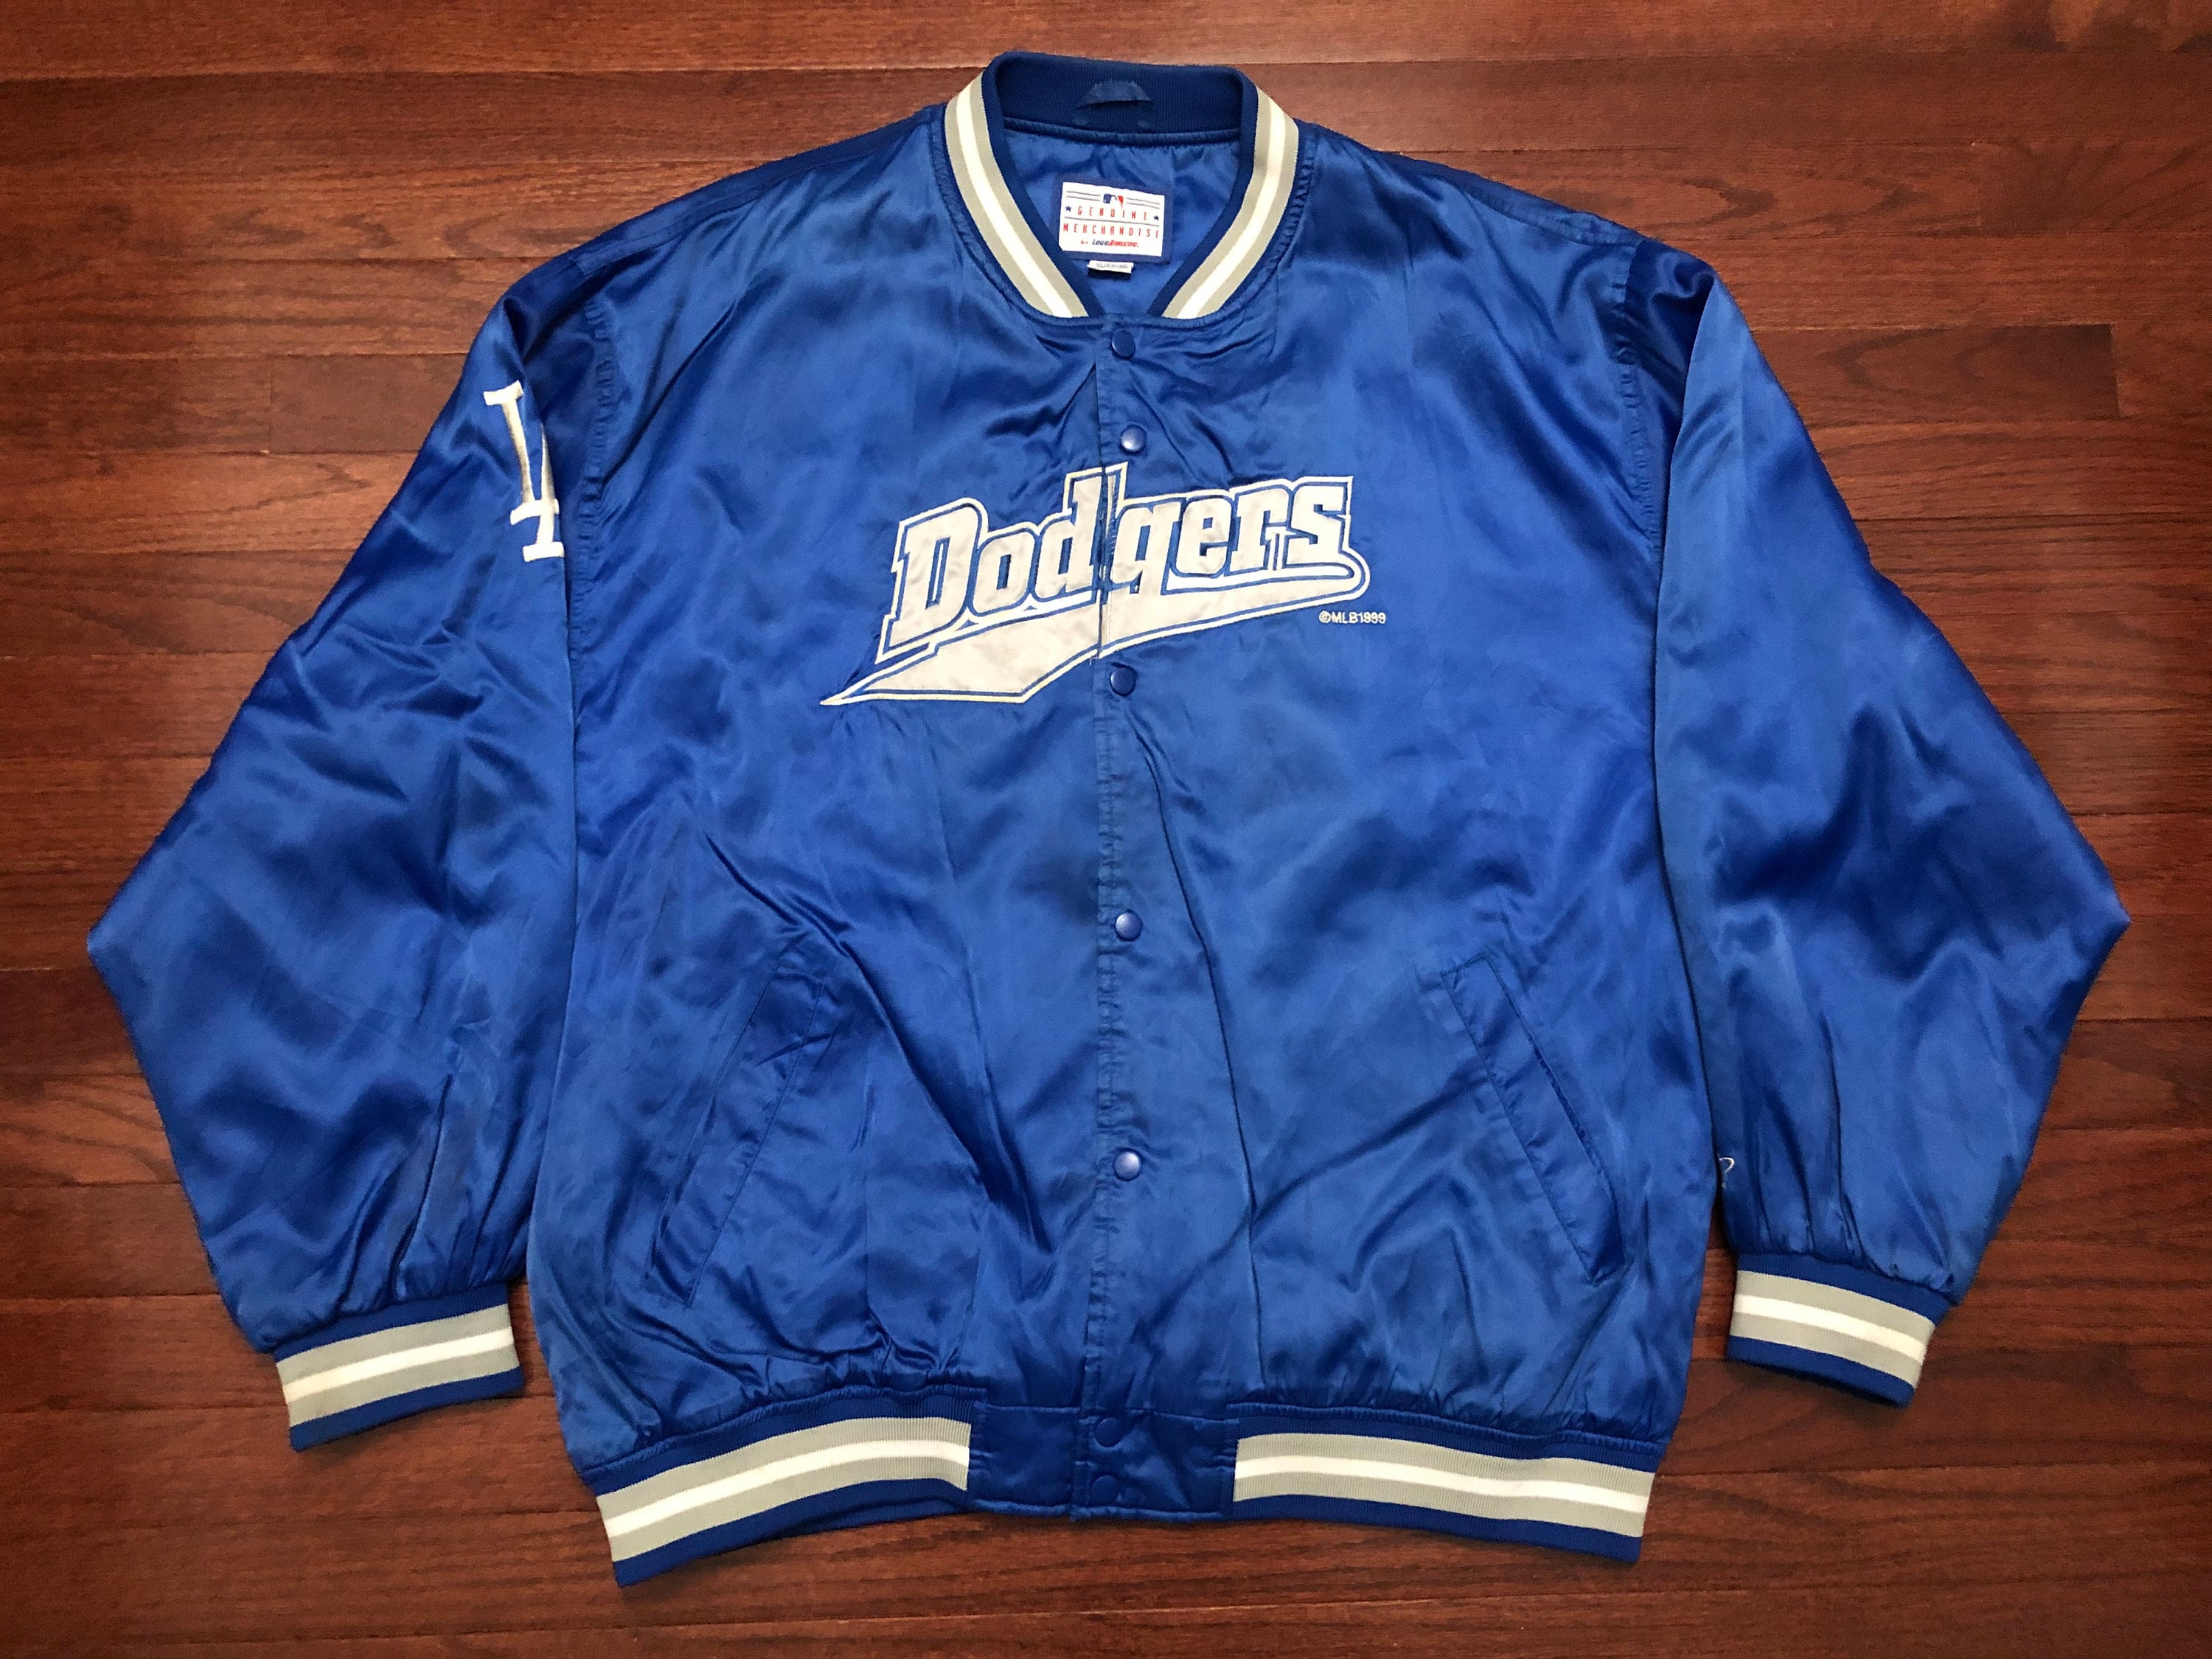 90s Dodgers Jacket - Etsy